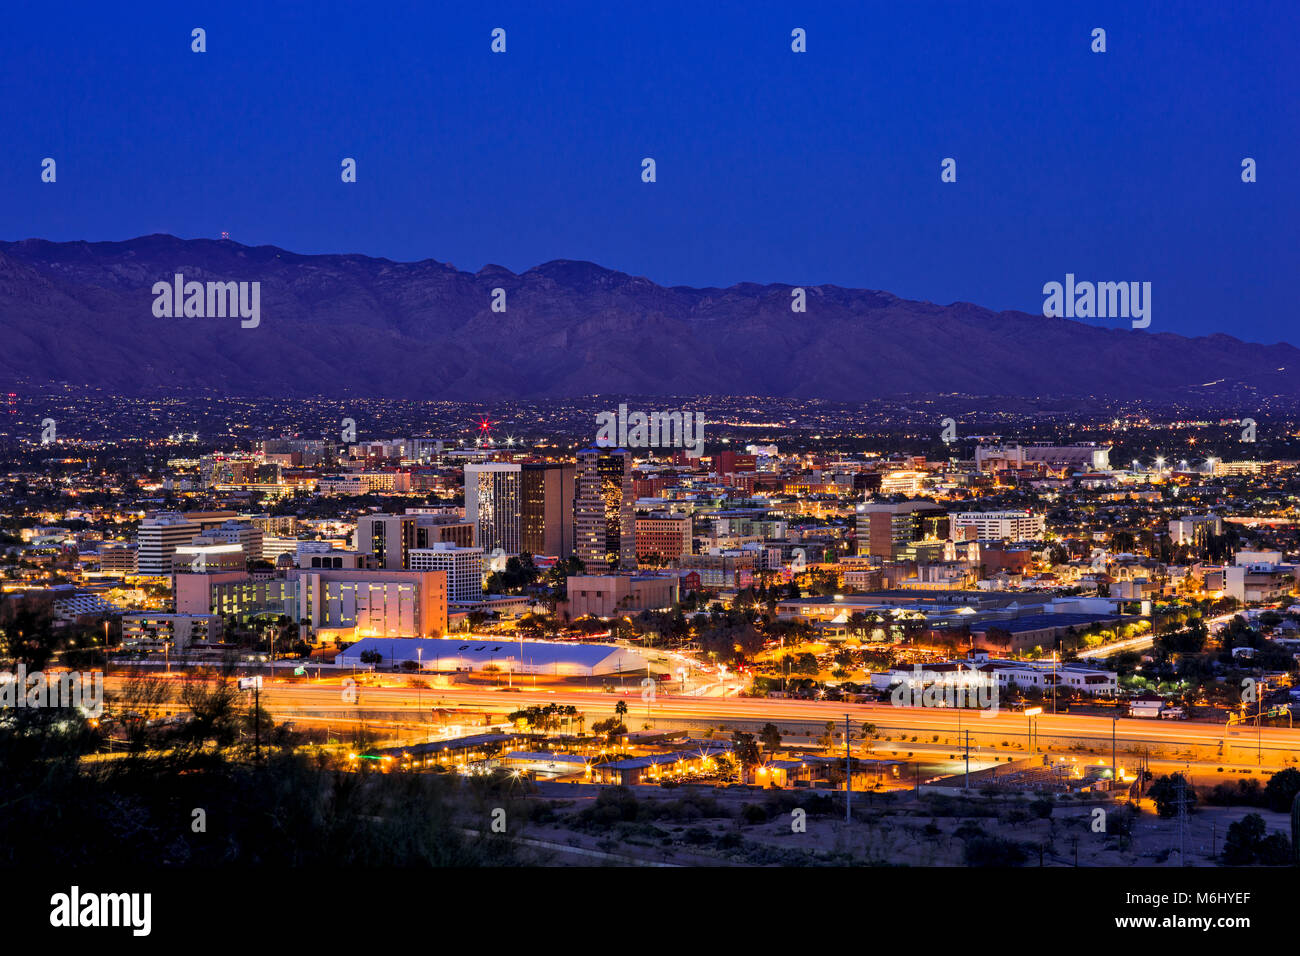 The Santa Catalina Mountains above the downtown Tucson, Arizona city skyline at night Stock Photo